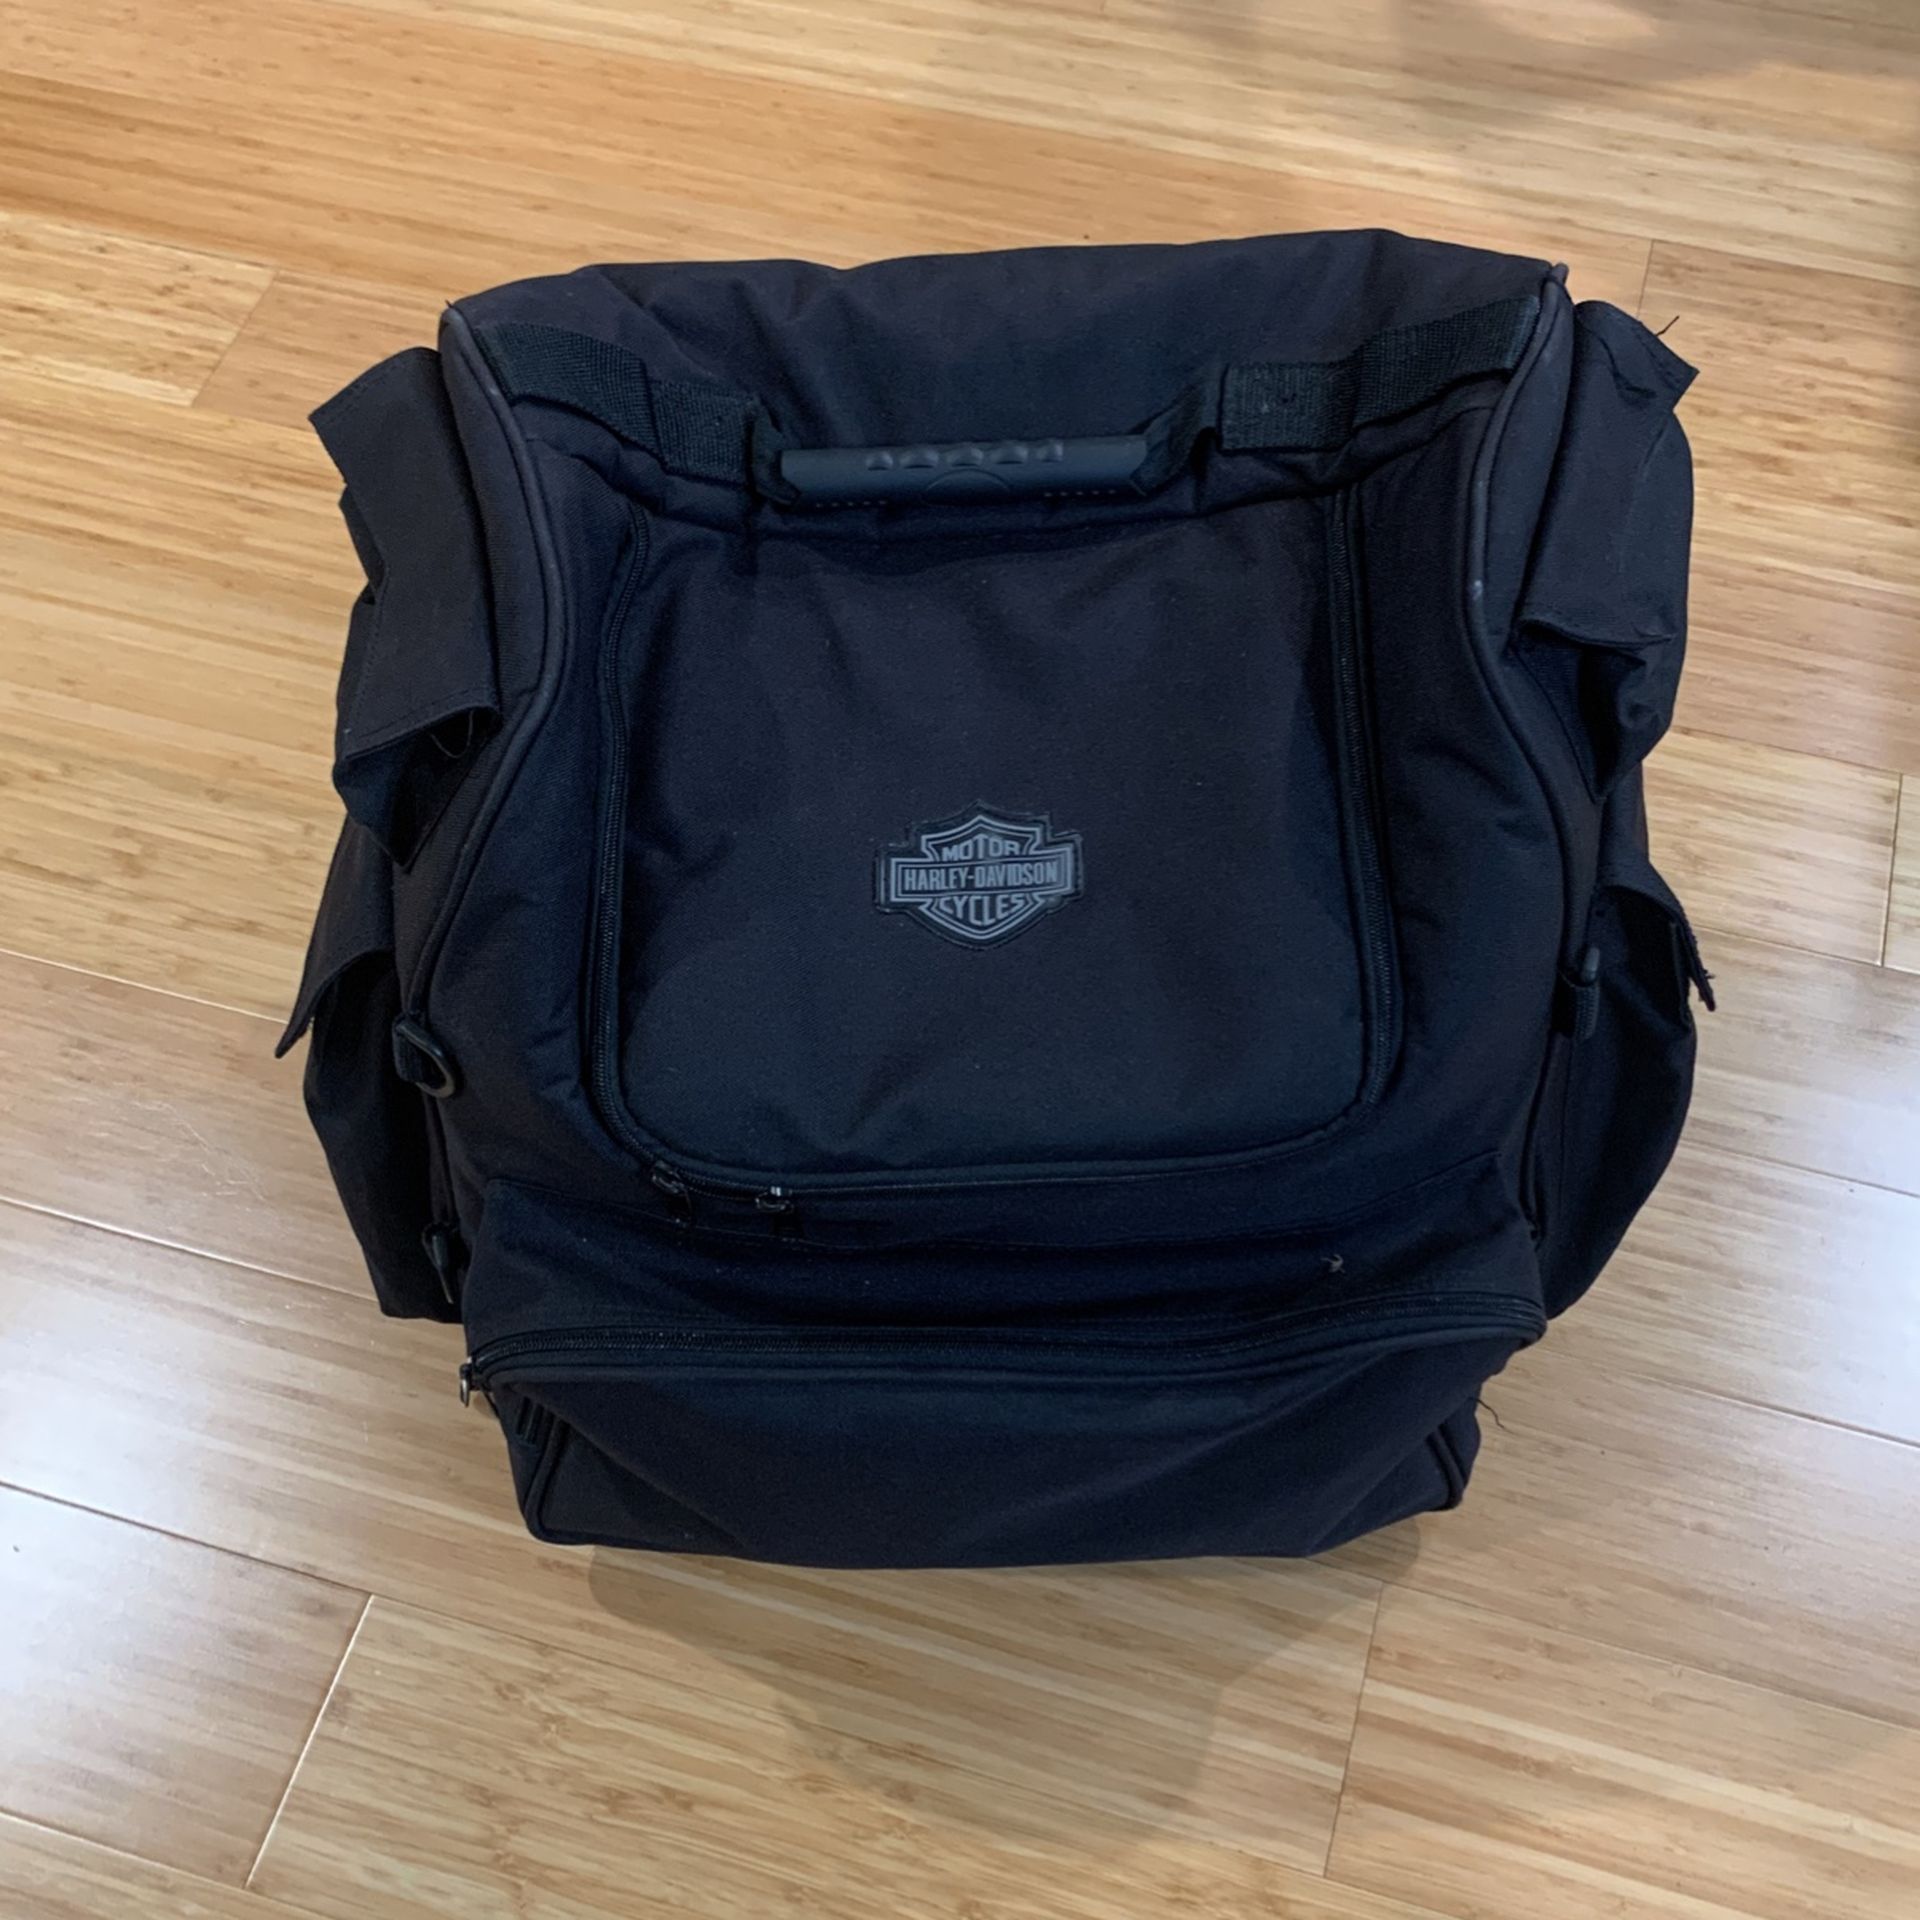 Harley Travel Bag